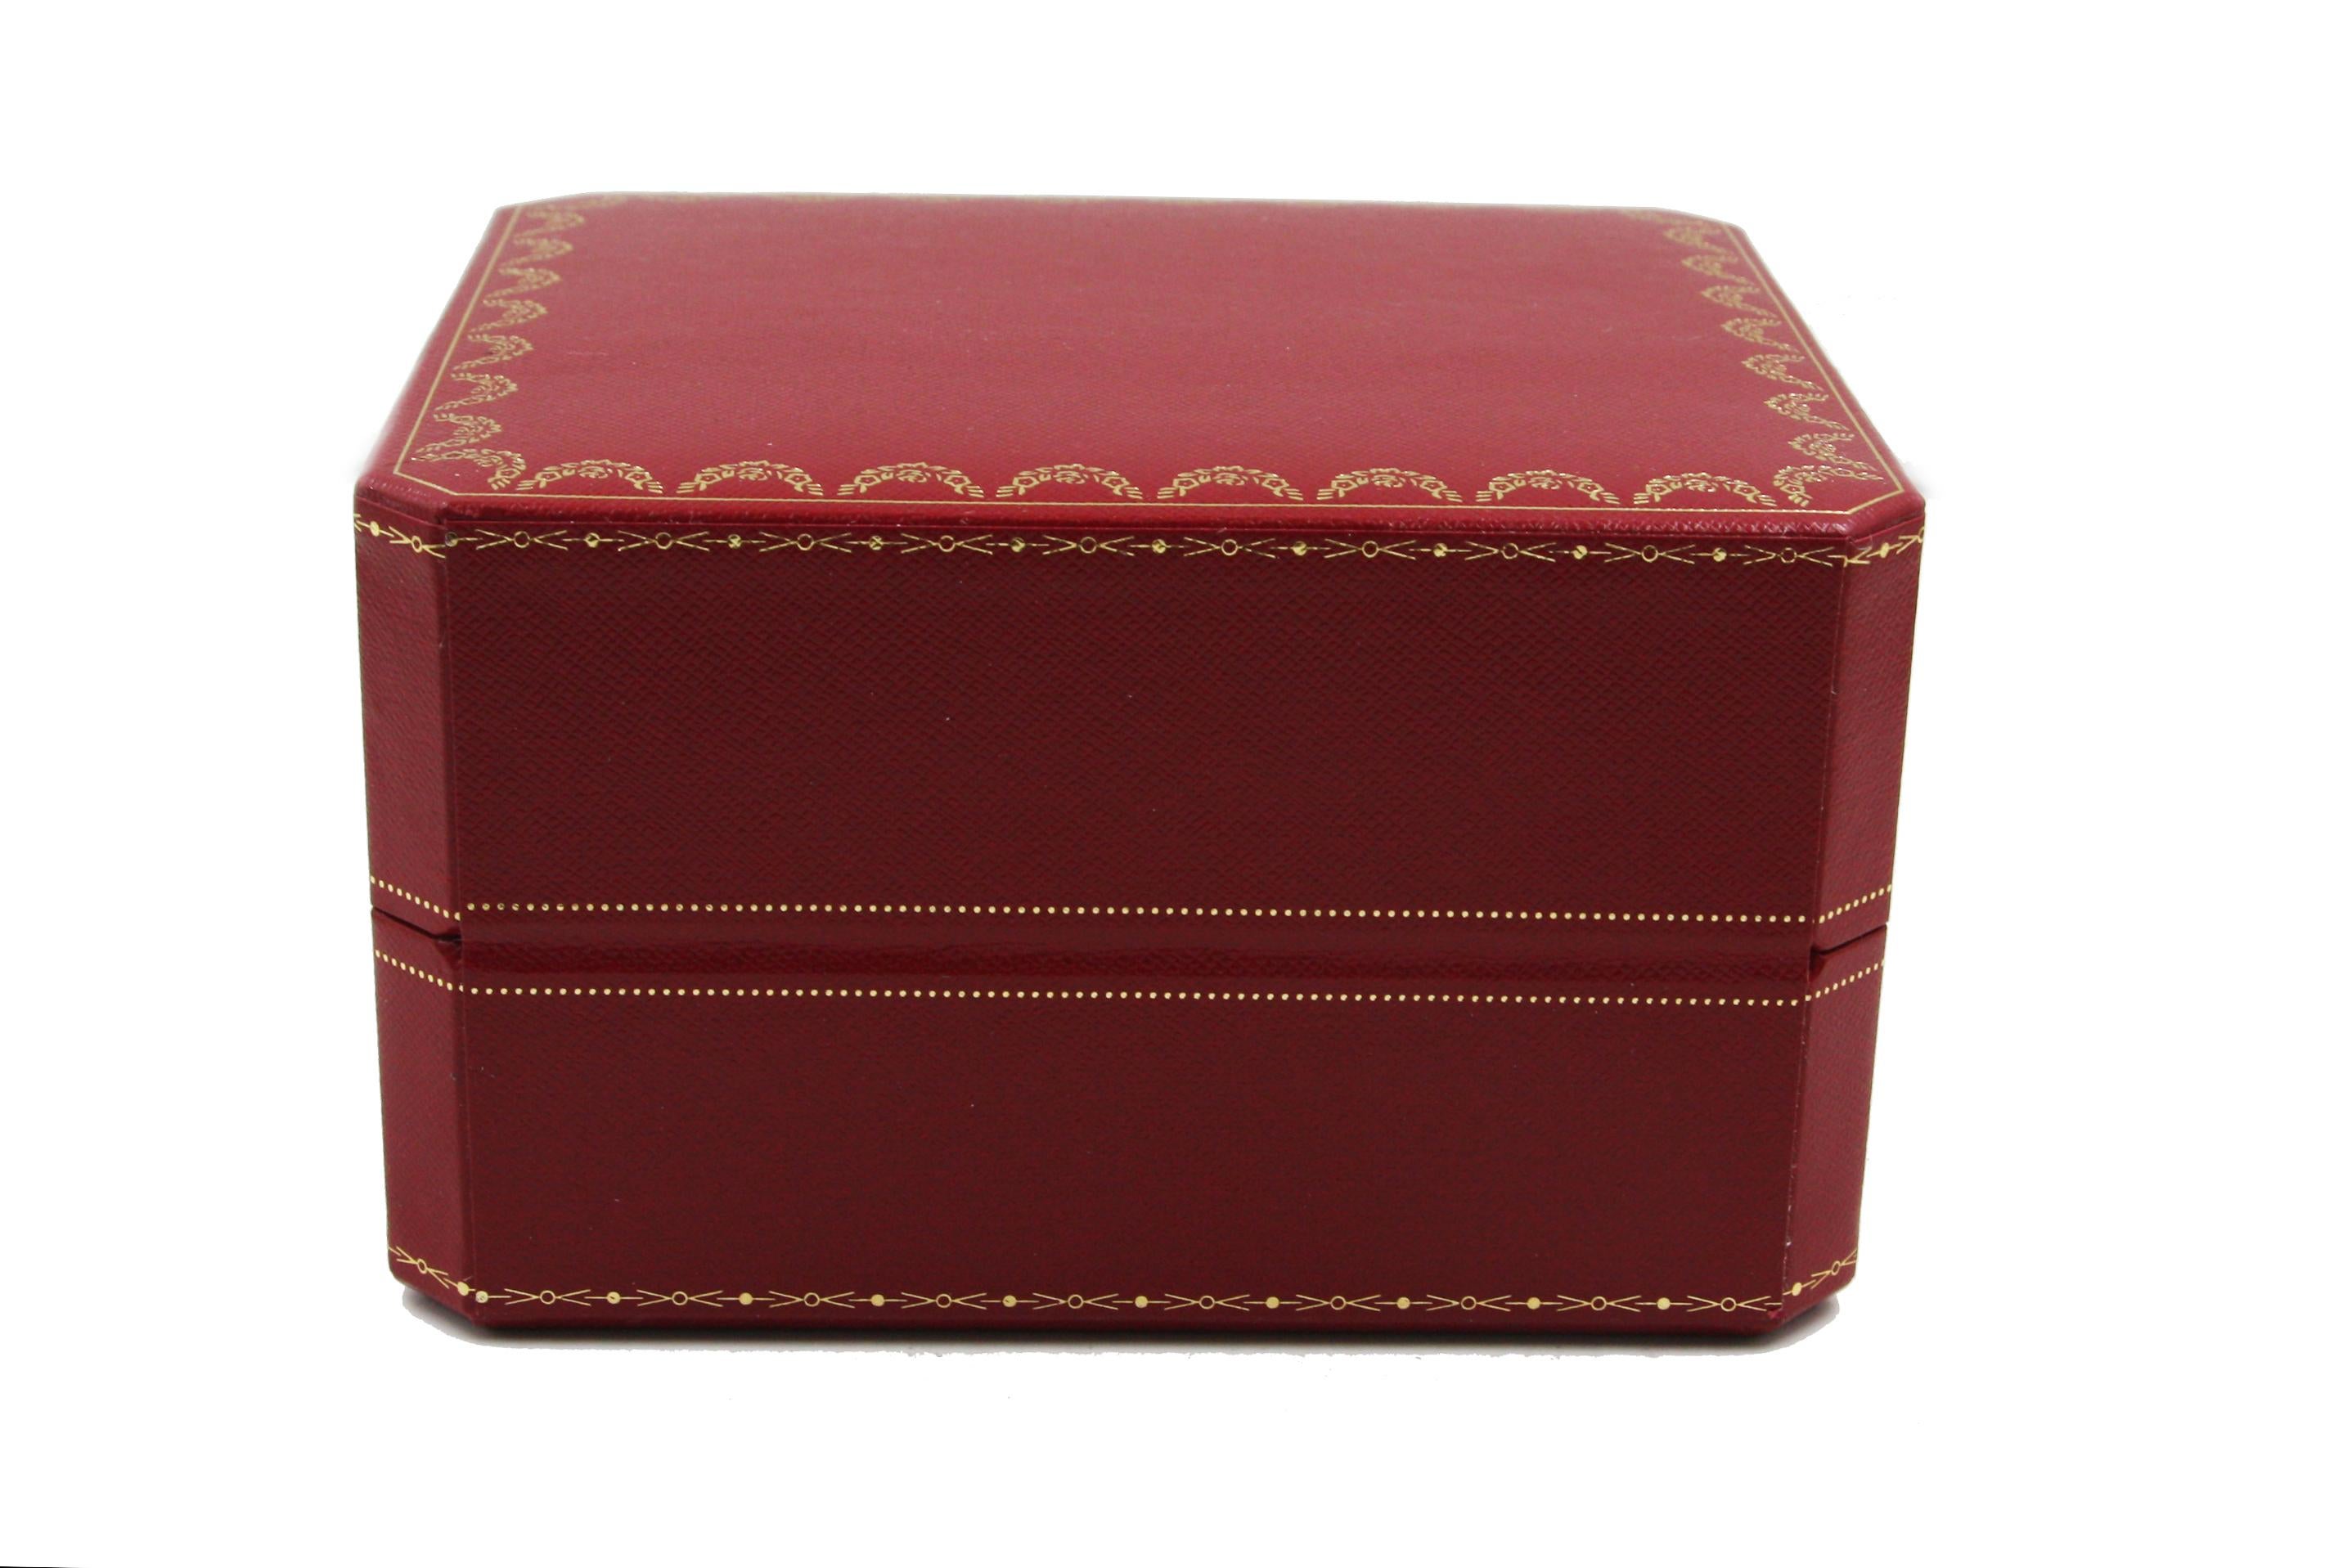 Cartier Red Watch Box
5.75